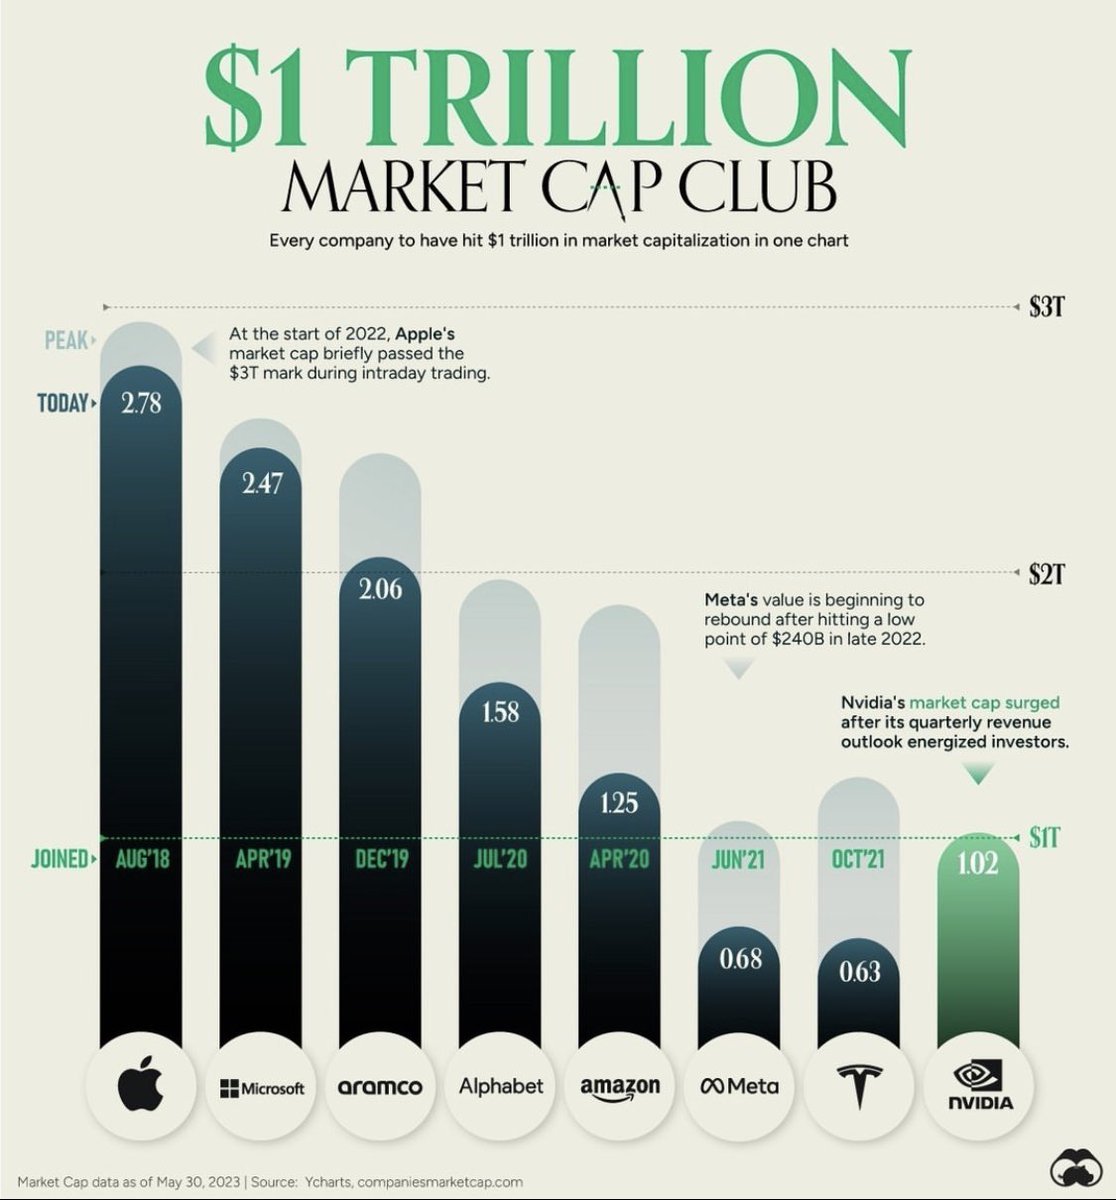 The $1 Trillion market cap club